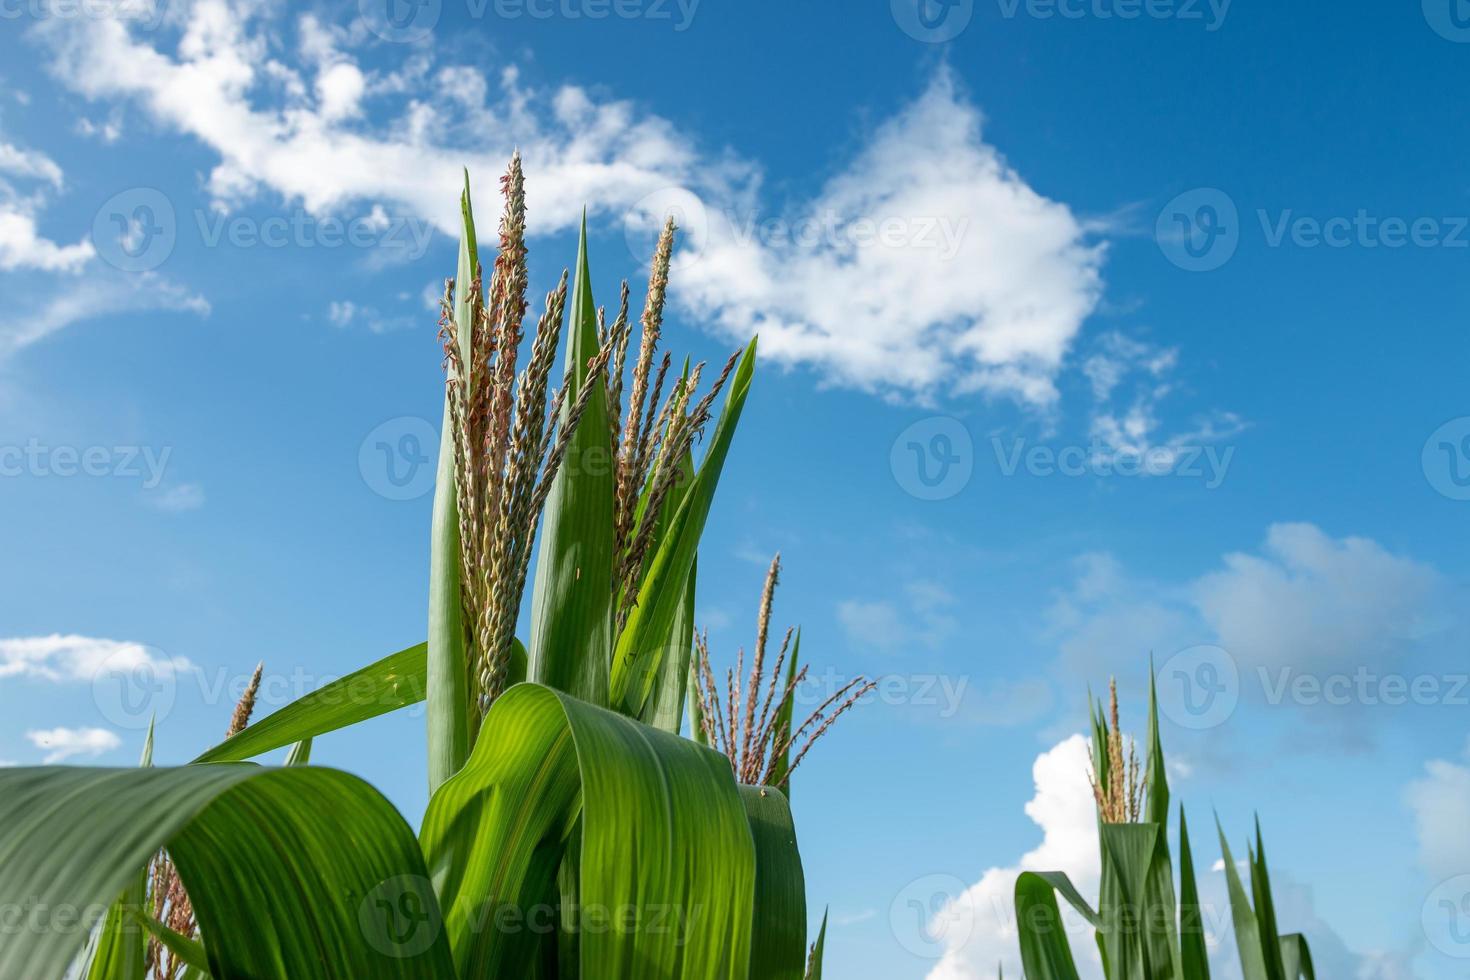 verger de maïs vert frais par un beau jour de ciel bleu photo